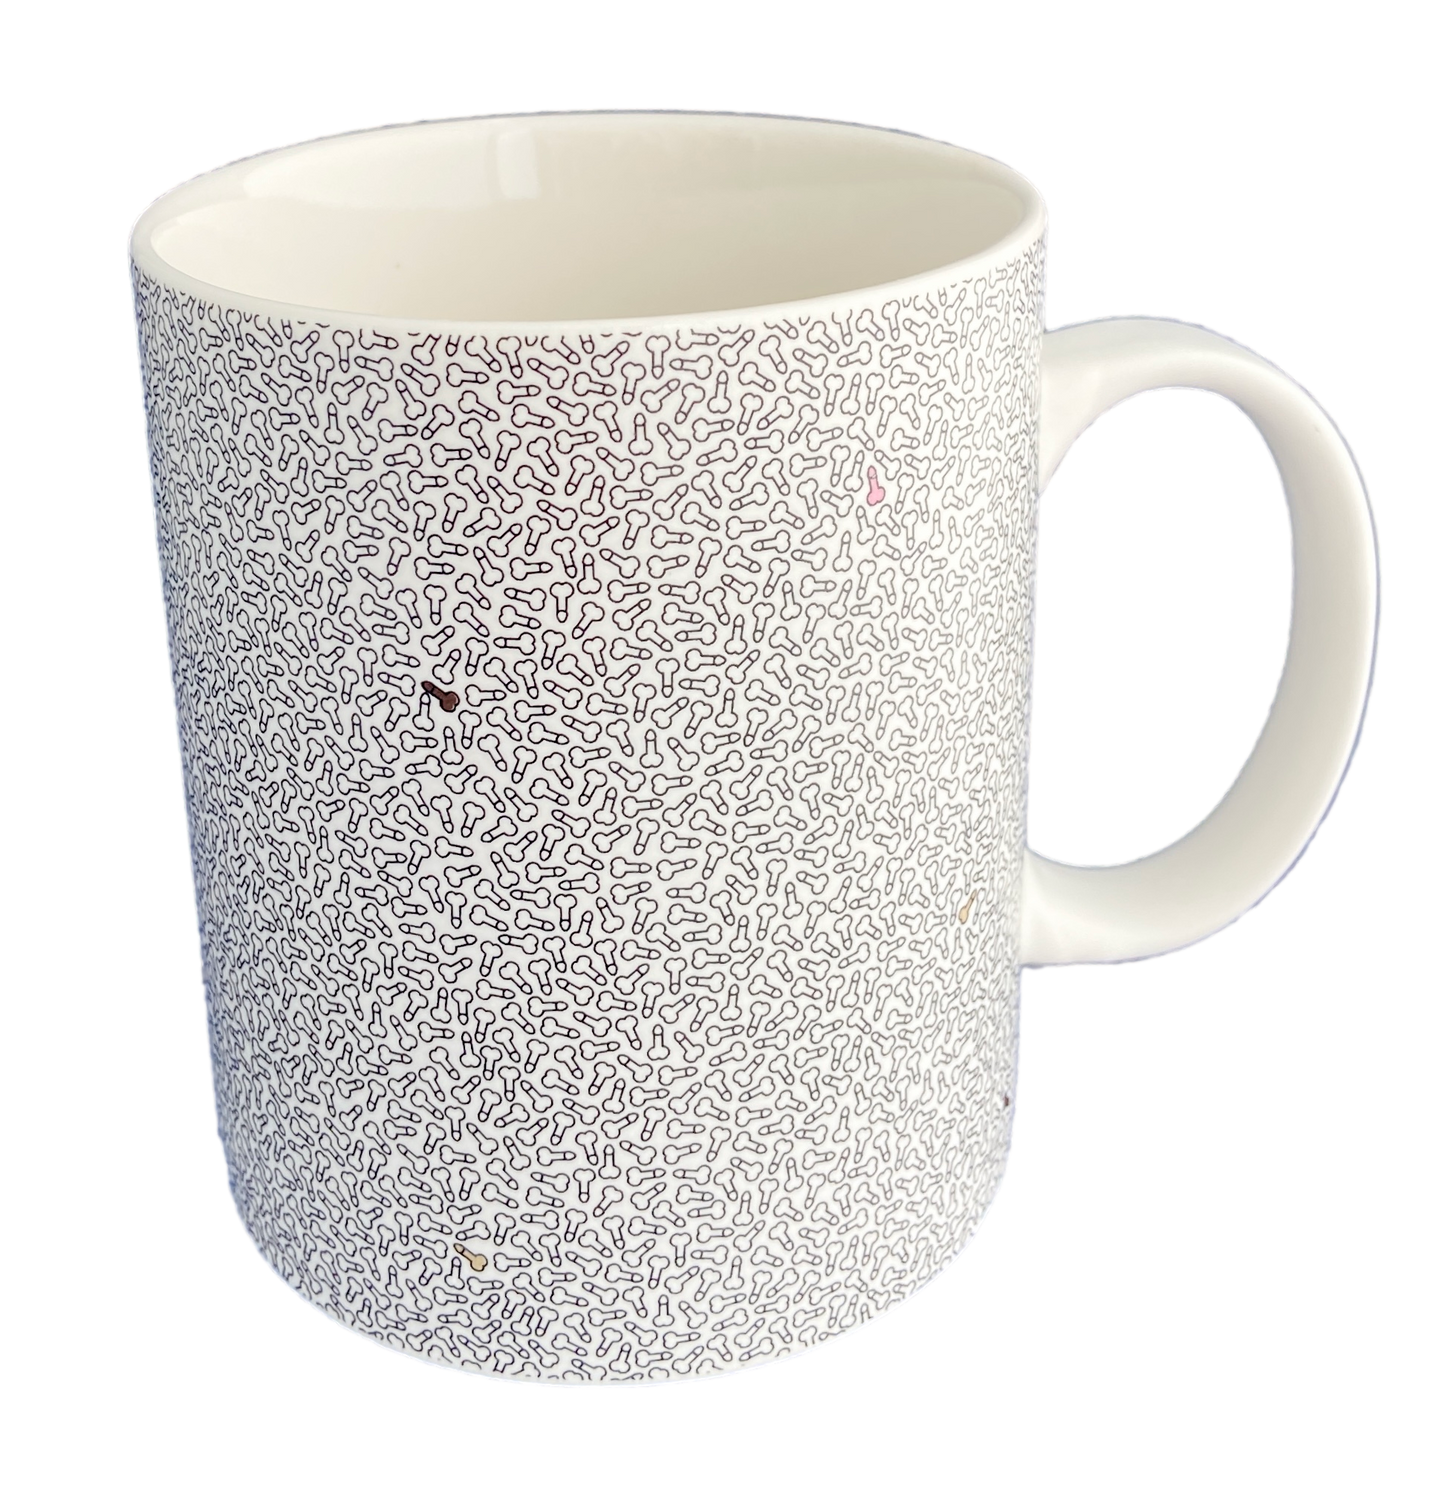 micropenis mug